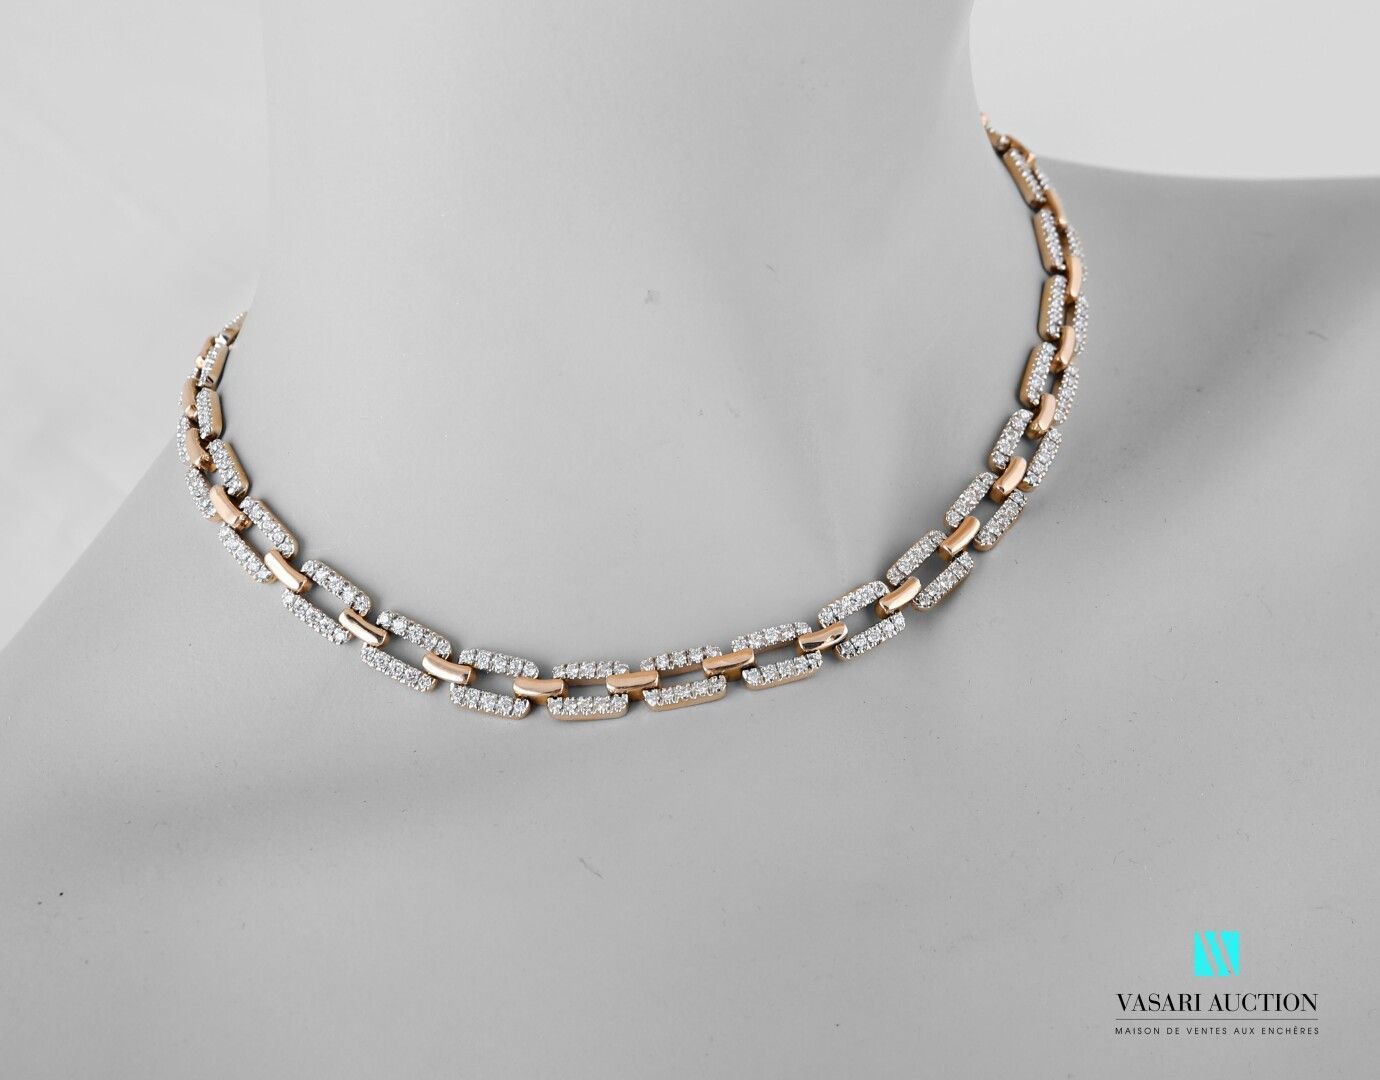 Null 由铺有钻石的白金长方形链节和抛光的玫瑰金链节交替组成的75千分之一黄金灵活项链。

毛重：59,7 g 长度：37 cm。